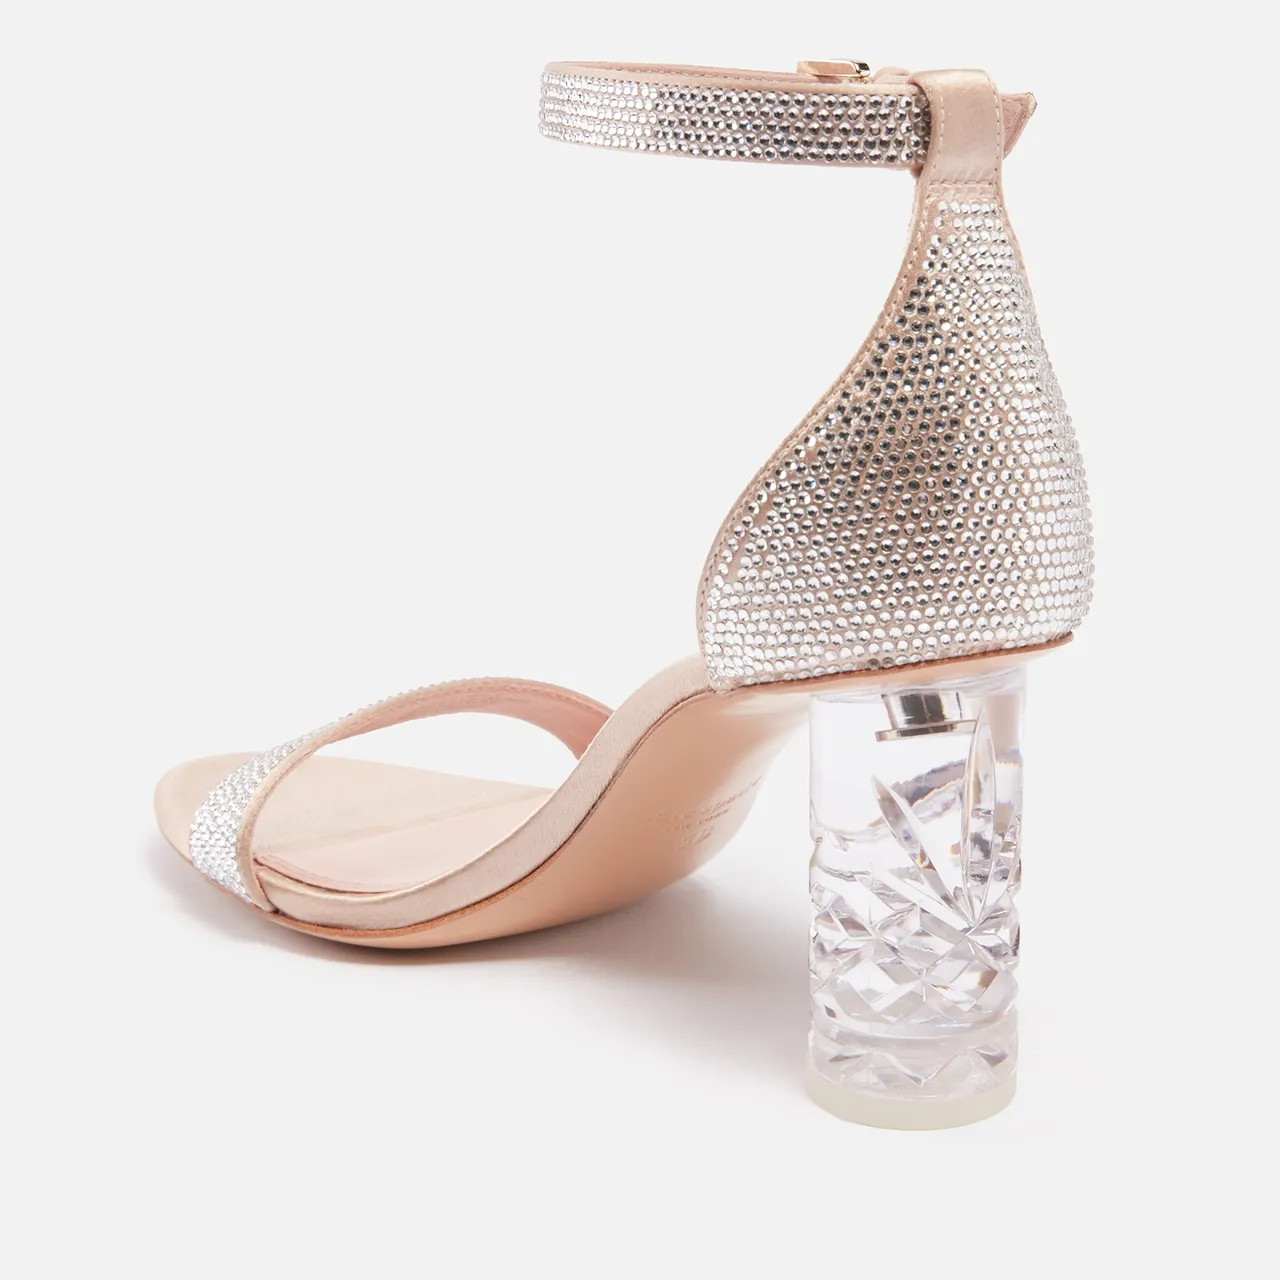 Kate Spade New York Women's Alora Pave Embellished Satin Sandals